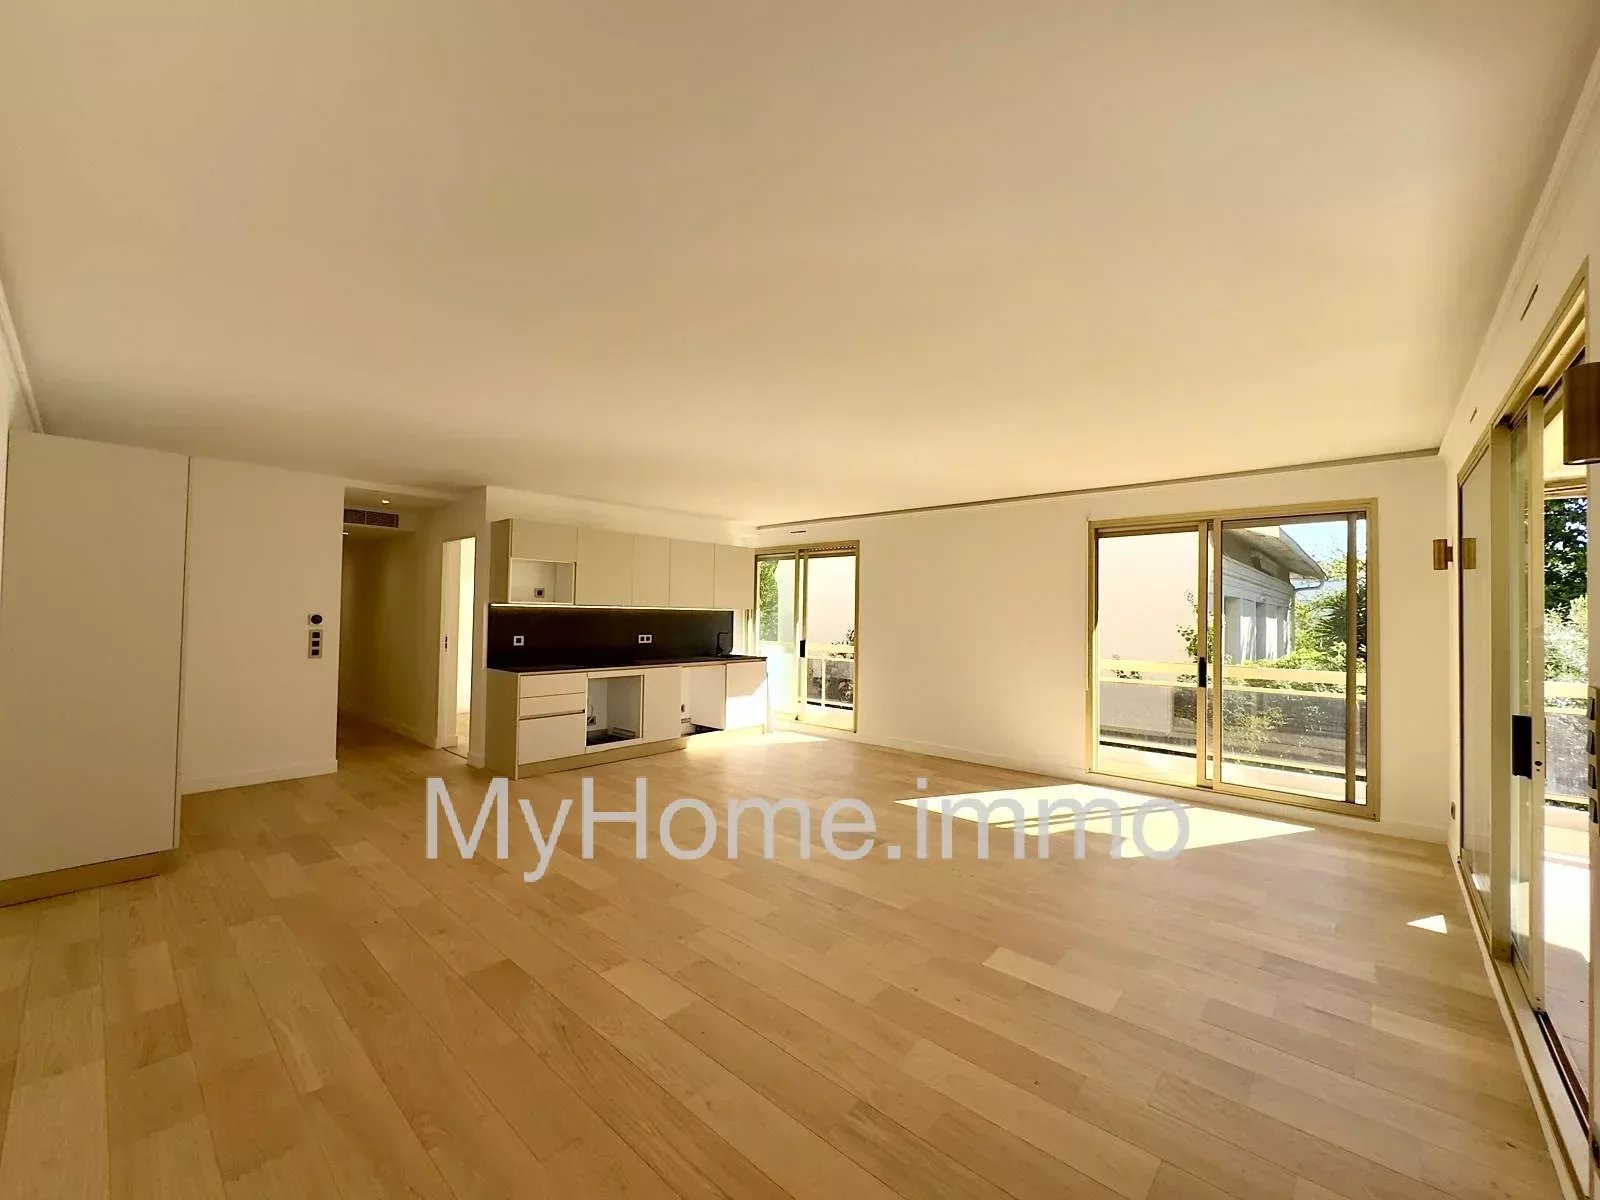 Vente Appartement 74m² 3 Pièces à Nice (06100) - Myhome.Immo